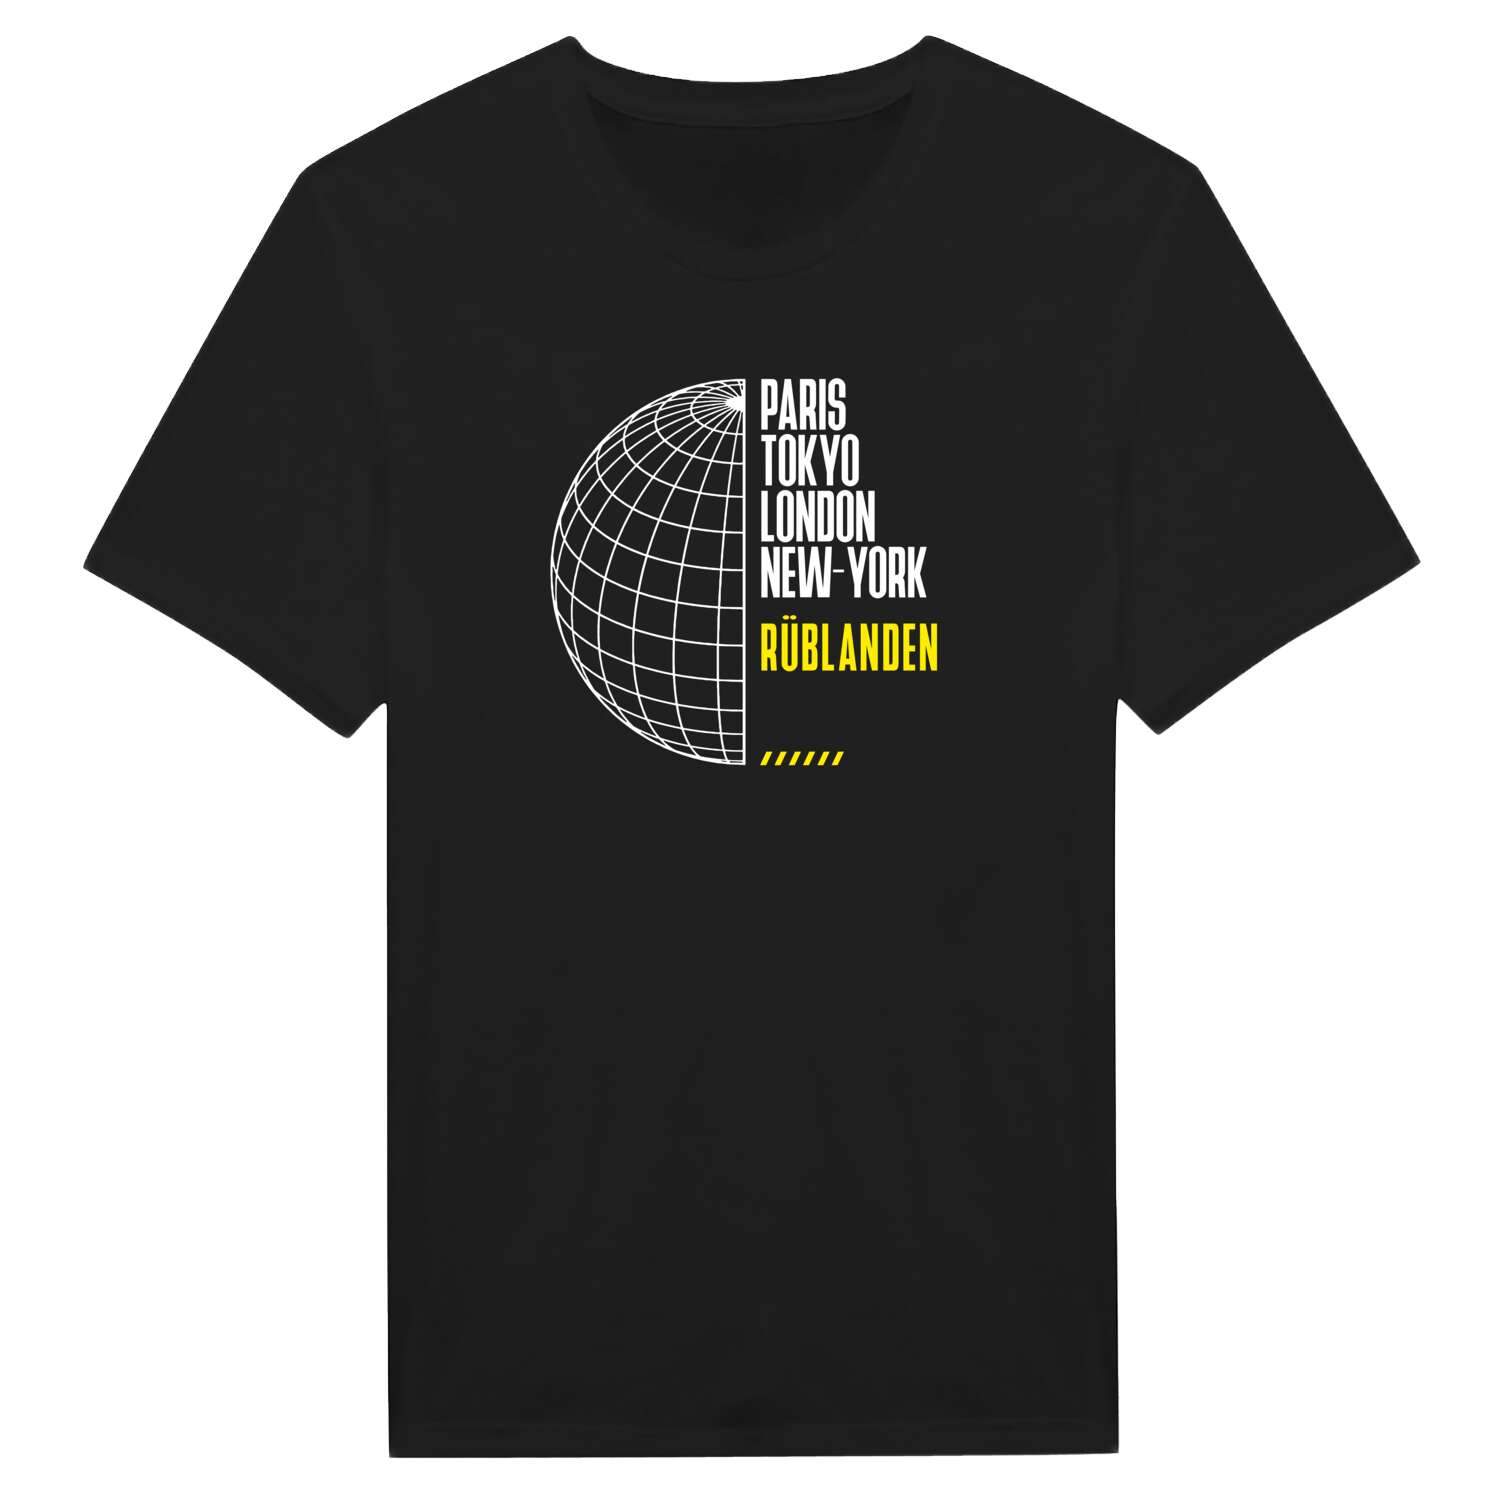 Rüblanden T-Shirt »Paris Tokyo London«